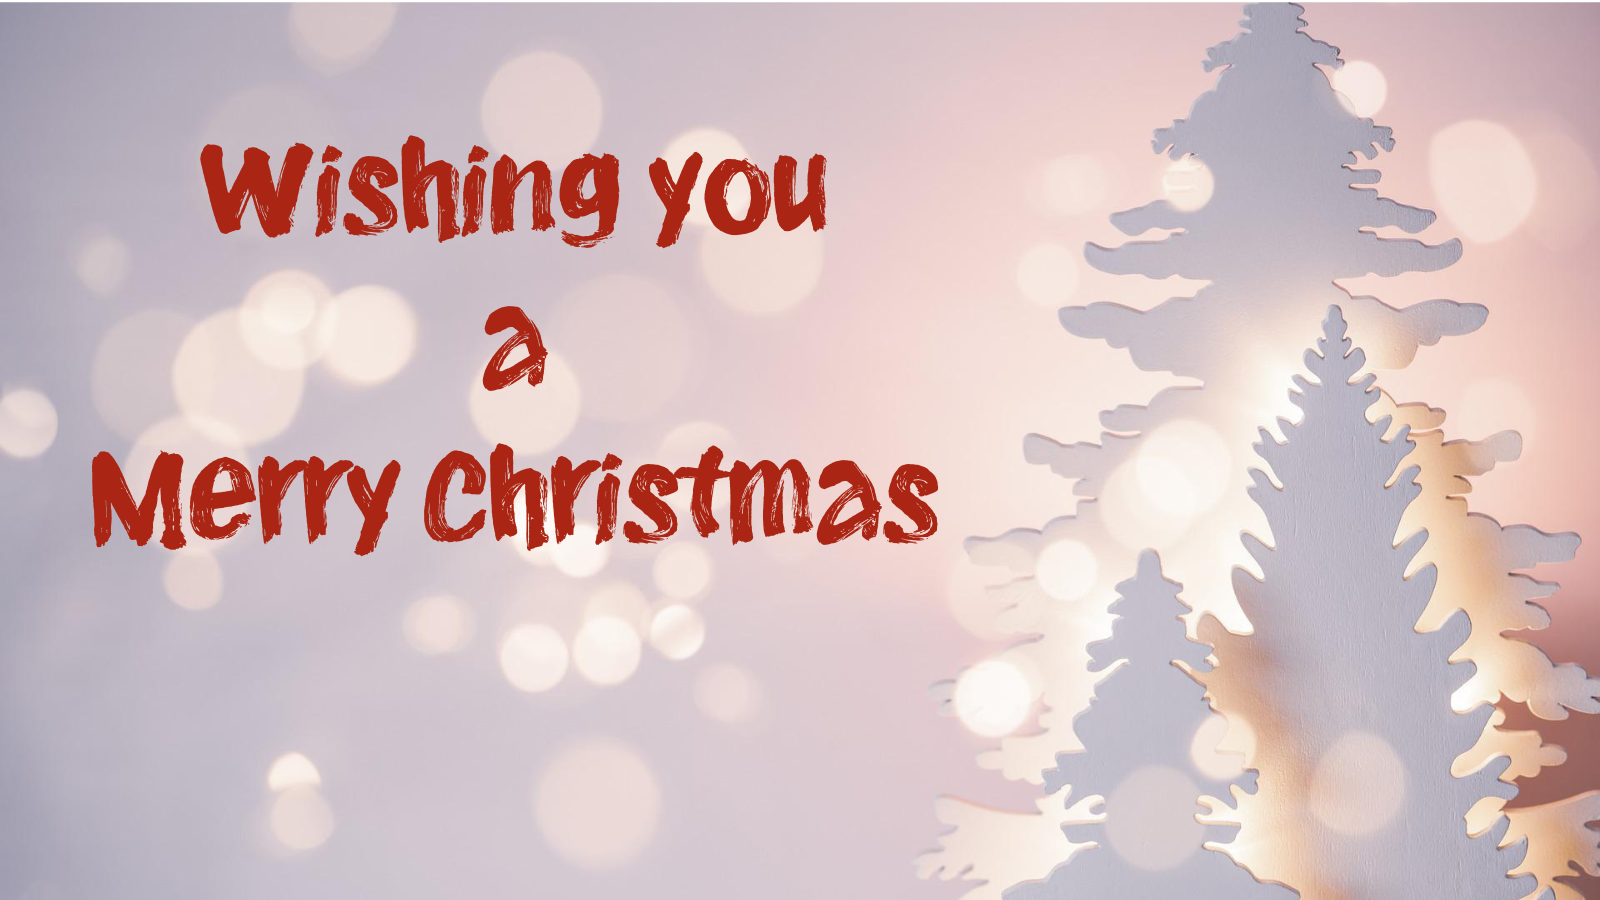 A Christmas message, Wishing you a Merry Christmas